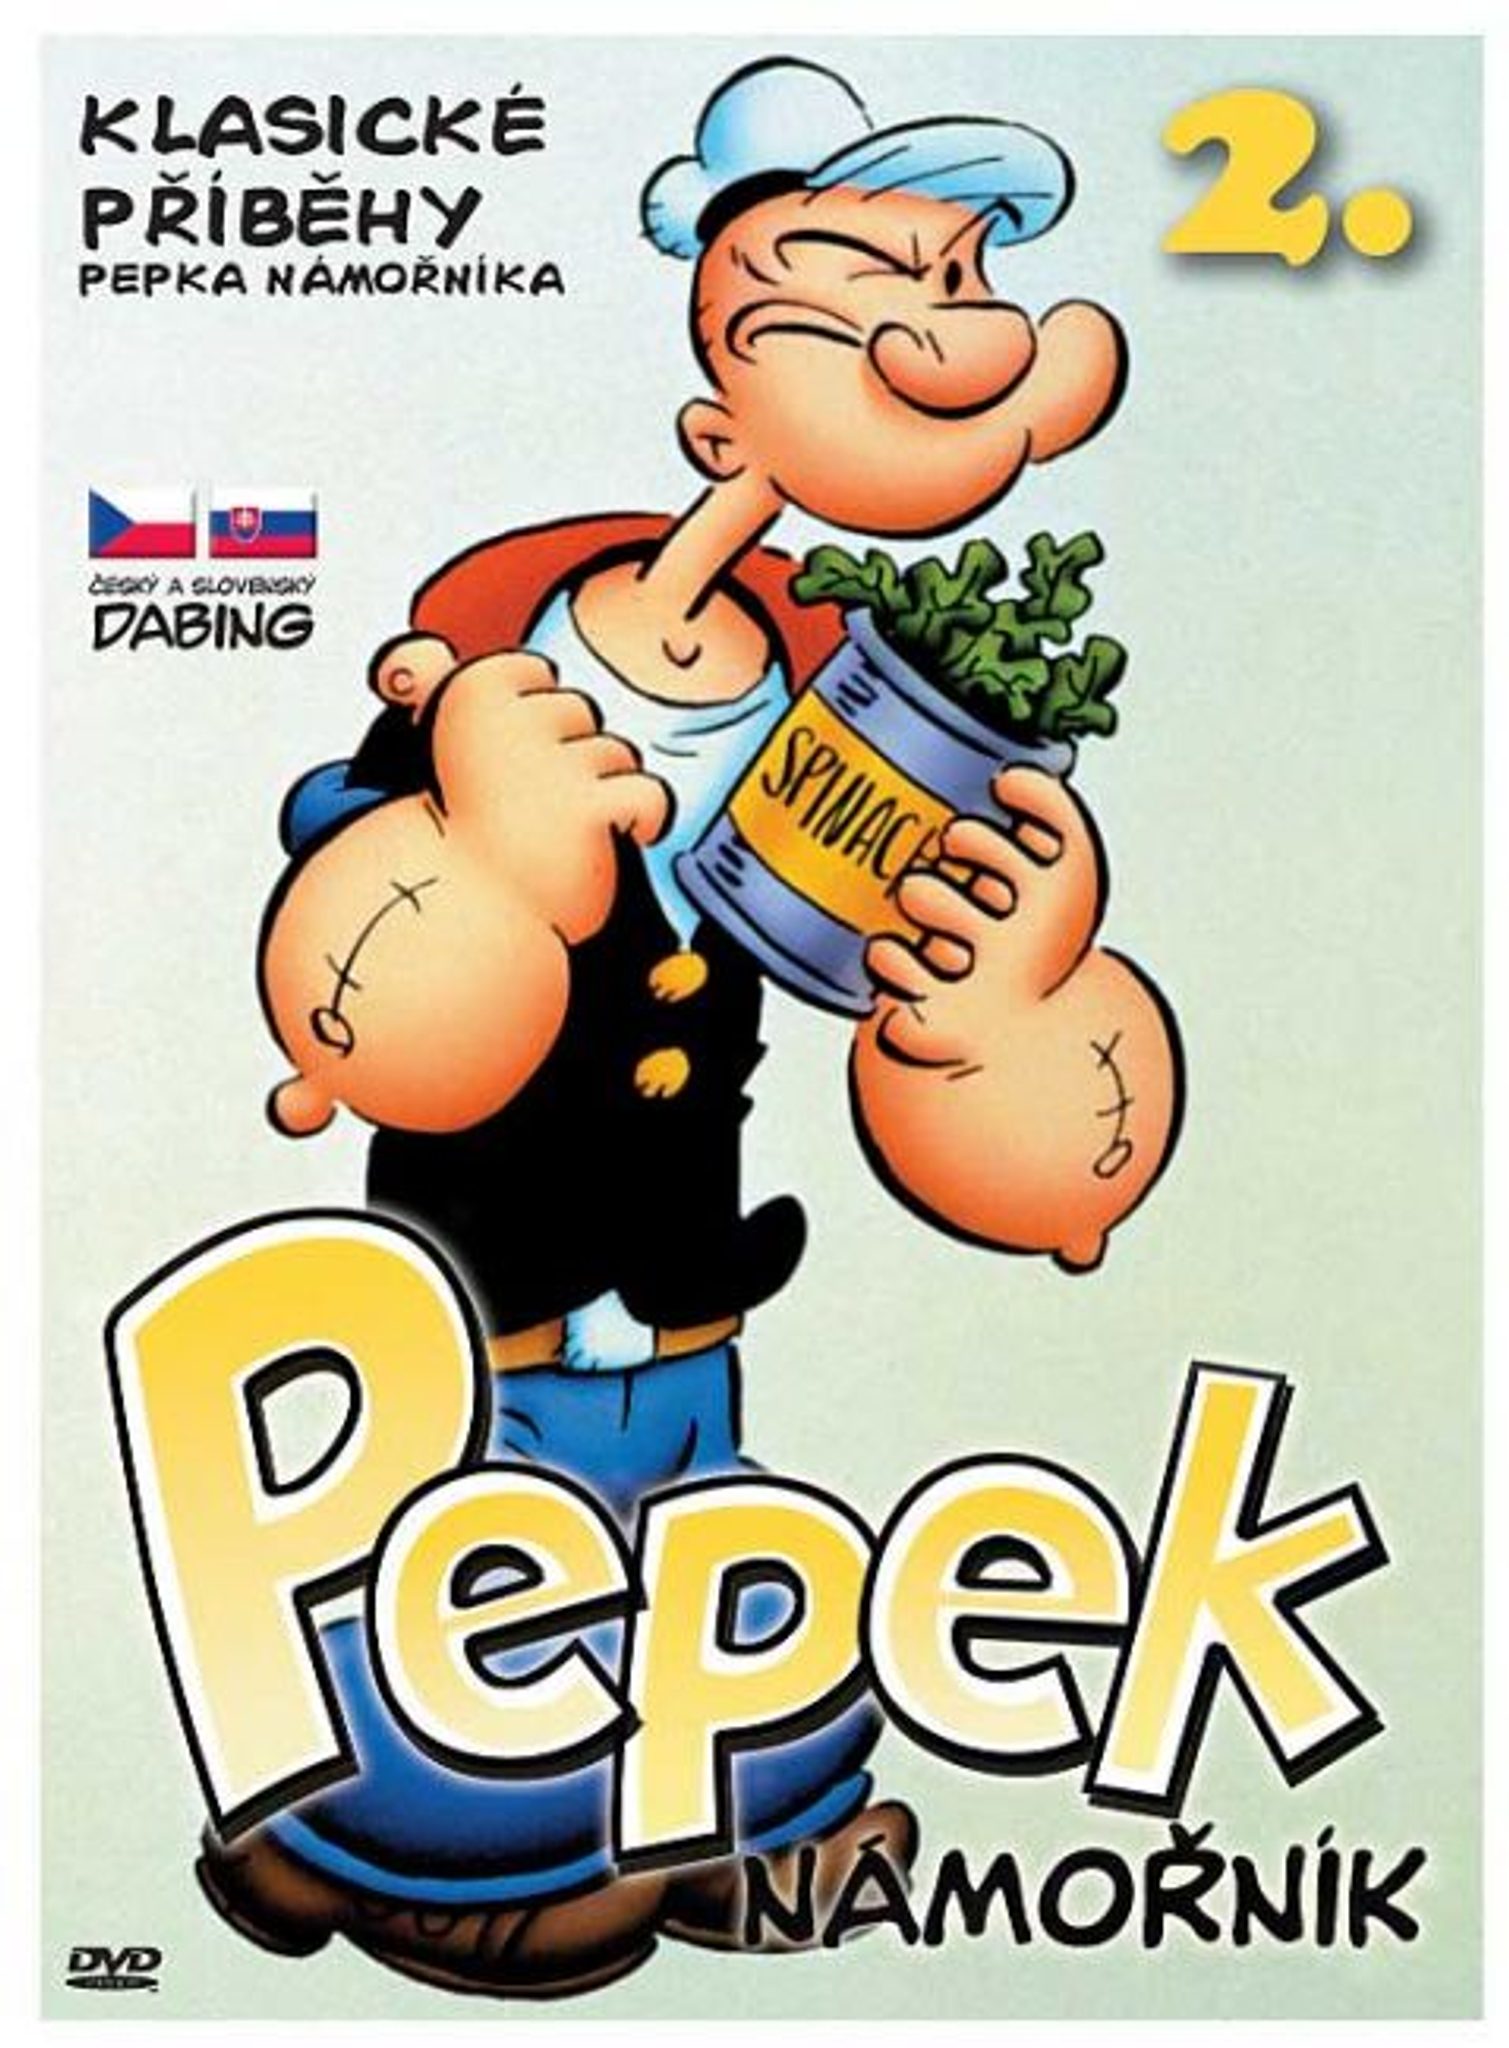 DVD Pepek nmonk - Klasick pbhy 2